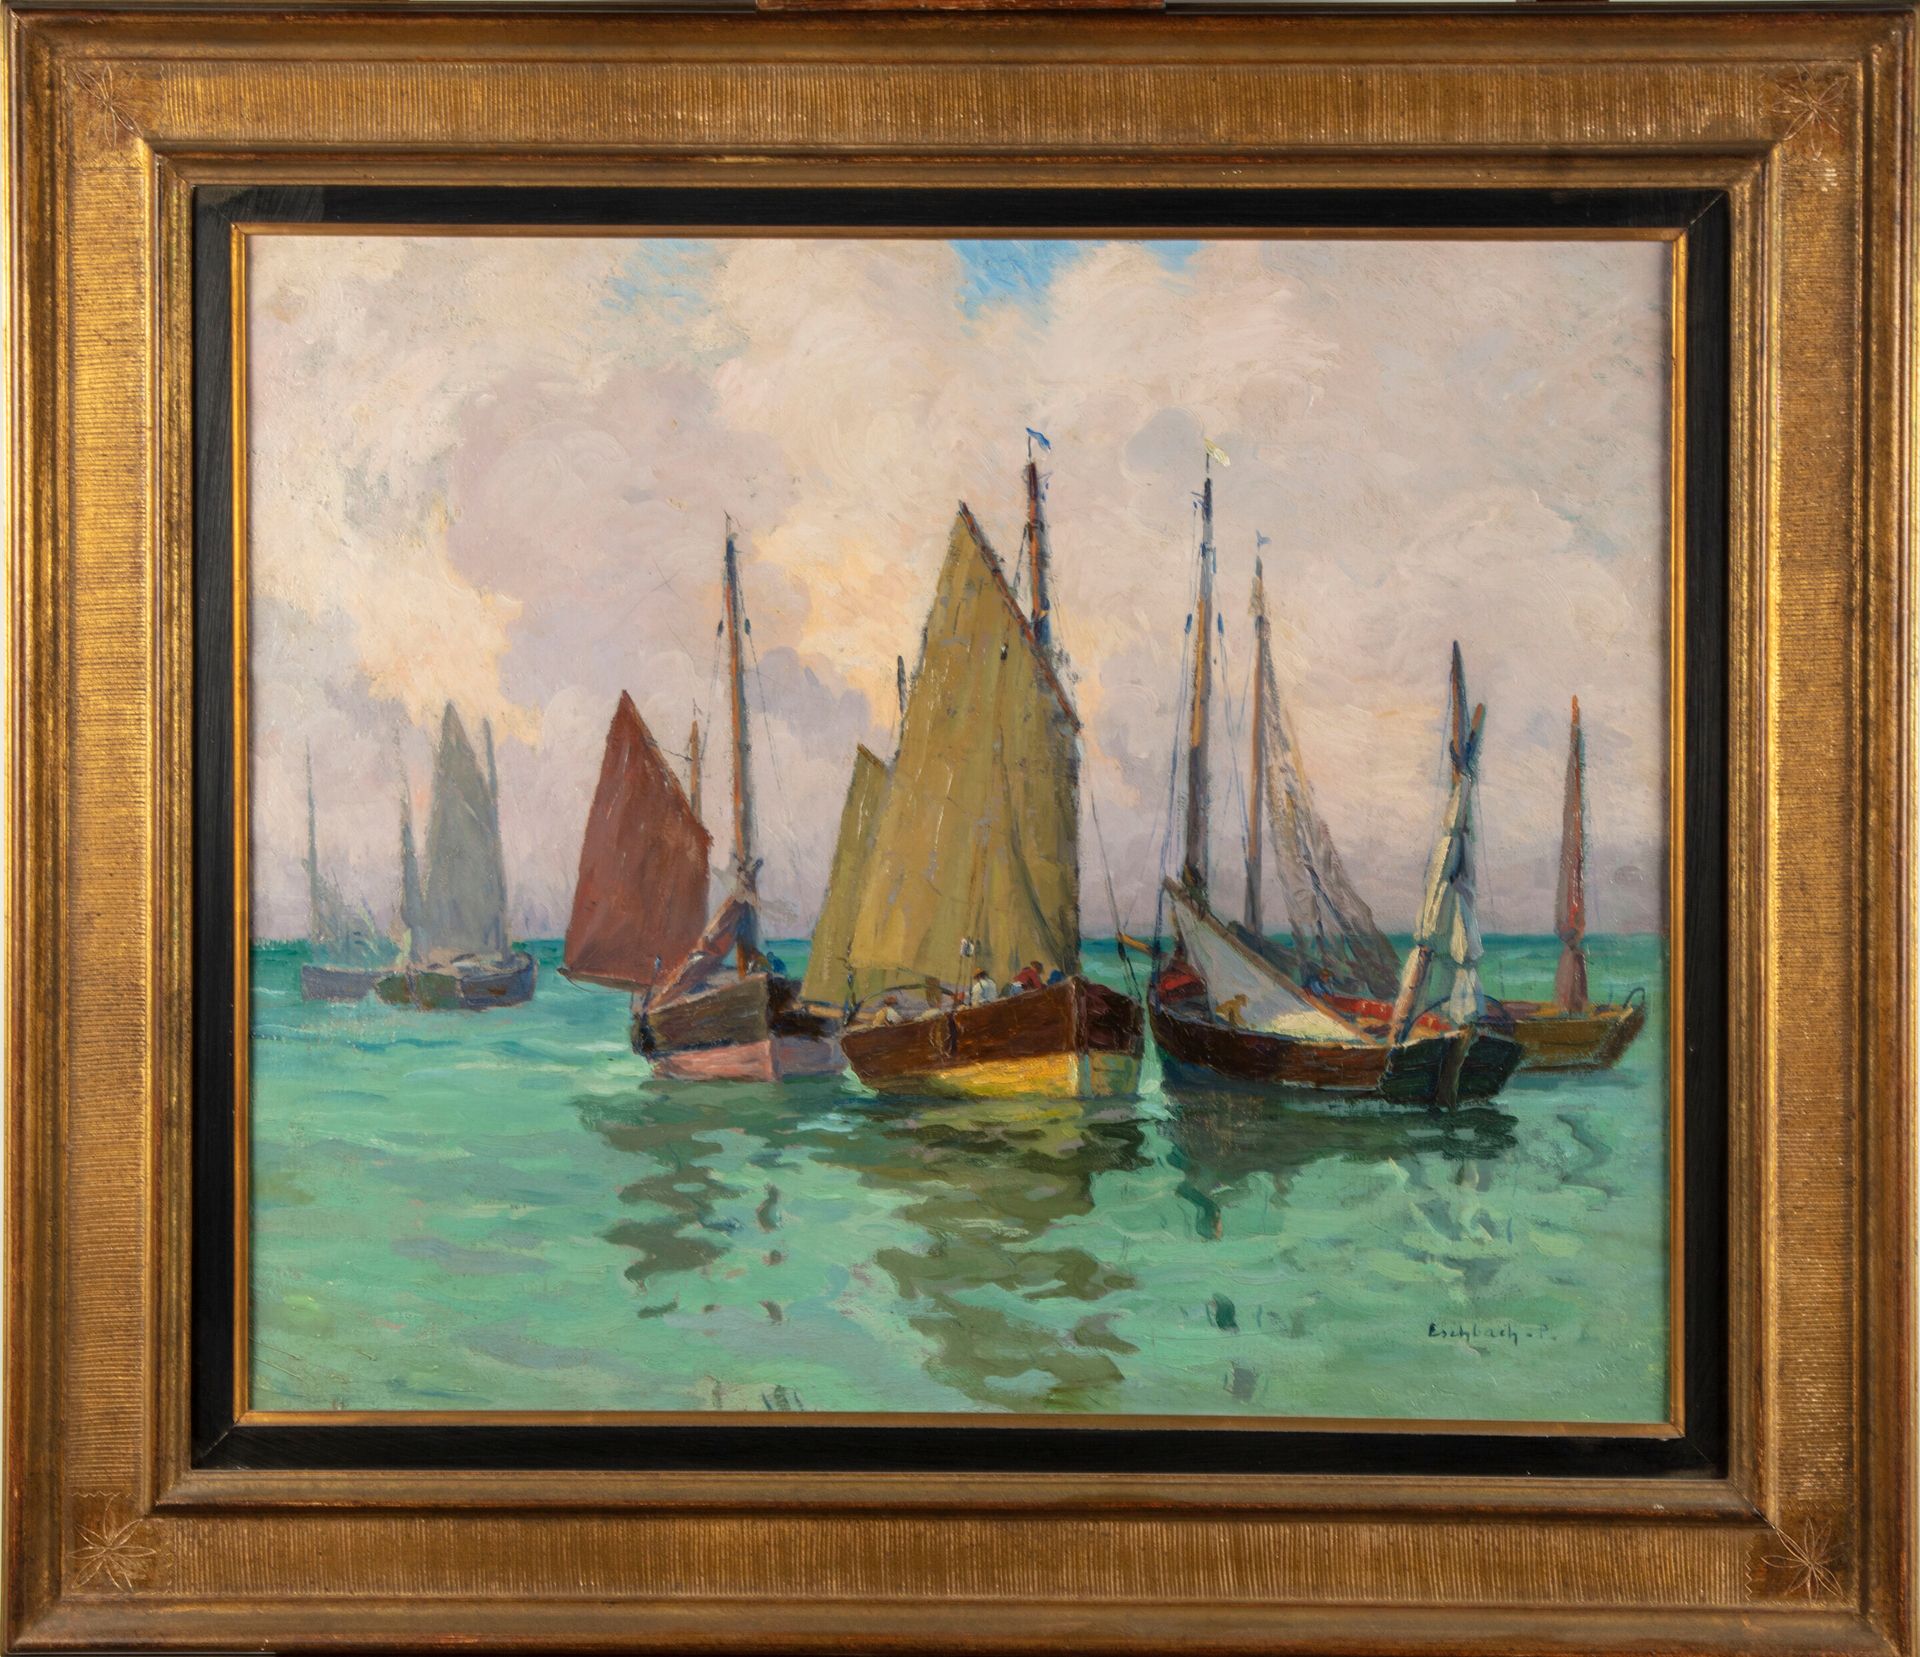 ESCHBACH Paul ESCHBACH (1881-1961)

Barche a vela 

Olio su tela, firmato in bas&hellip;